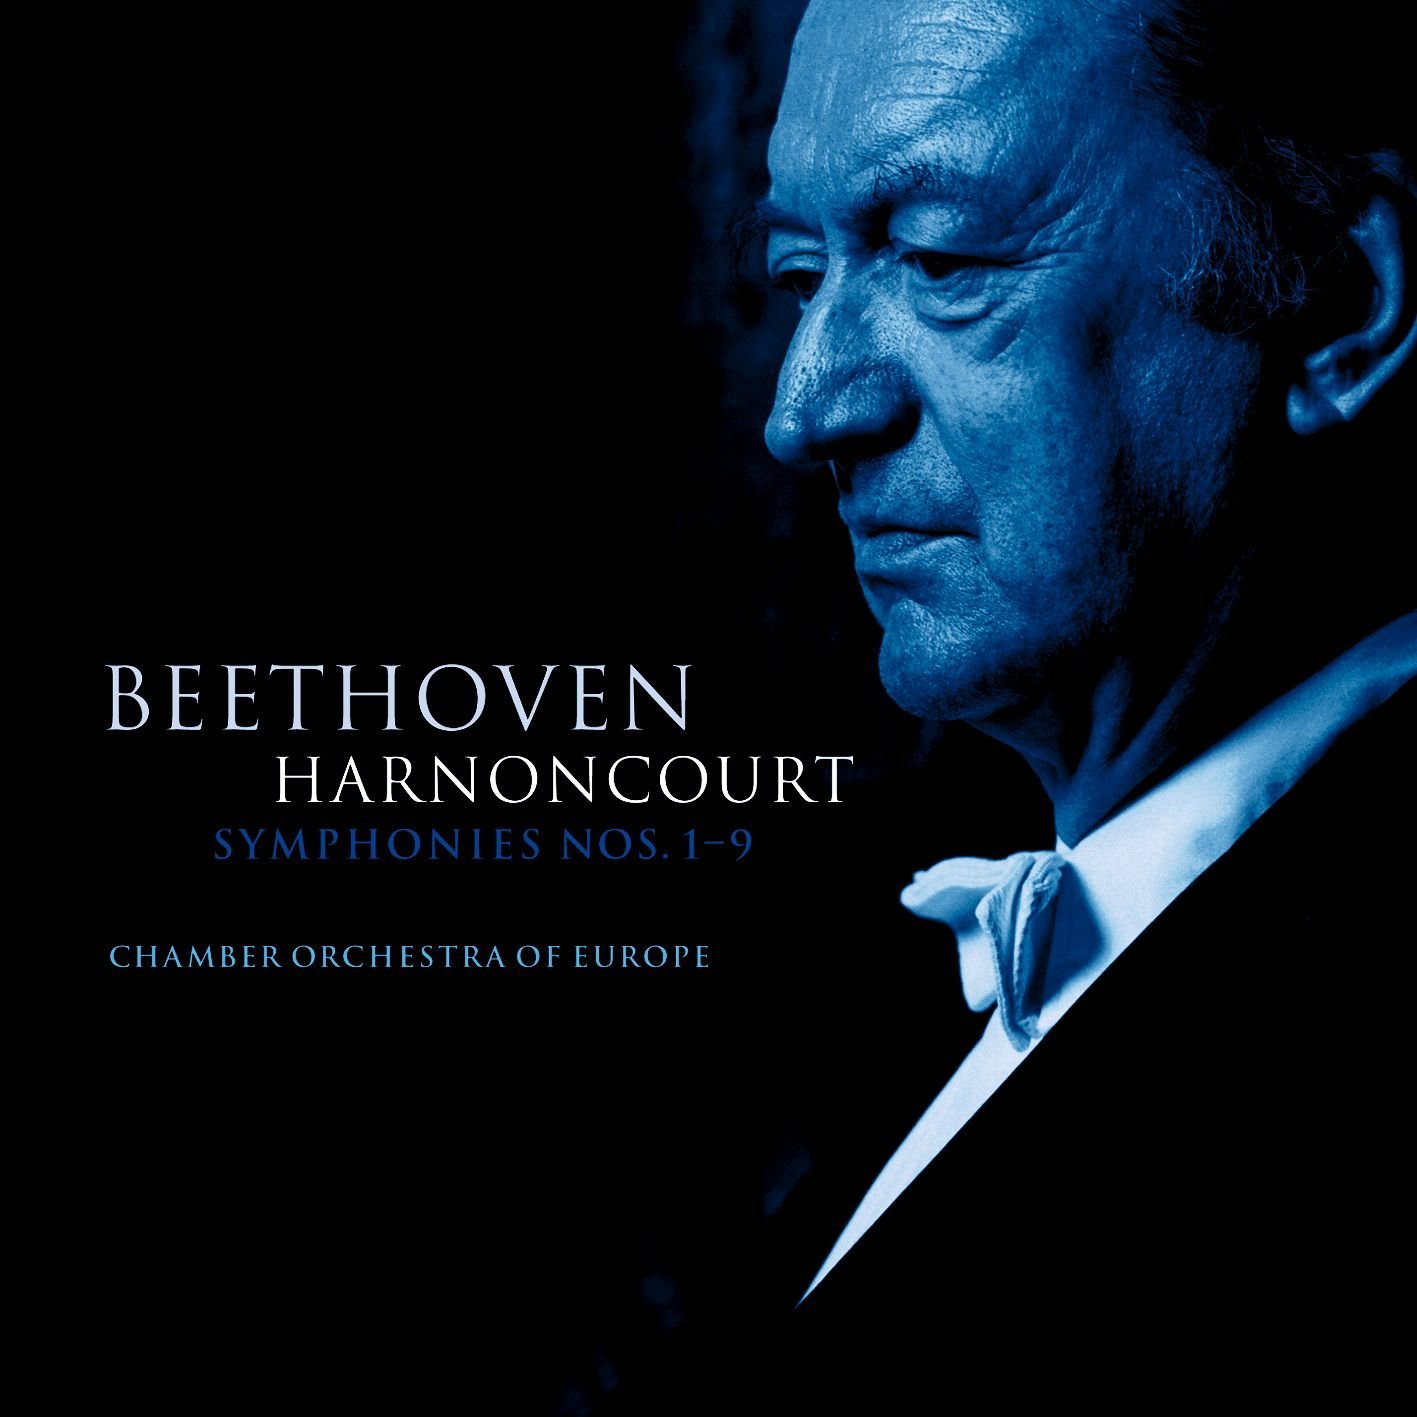 Harnoncourt's Beethoven symphonies recording